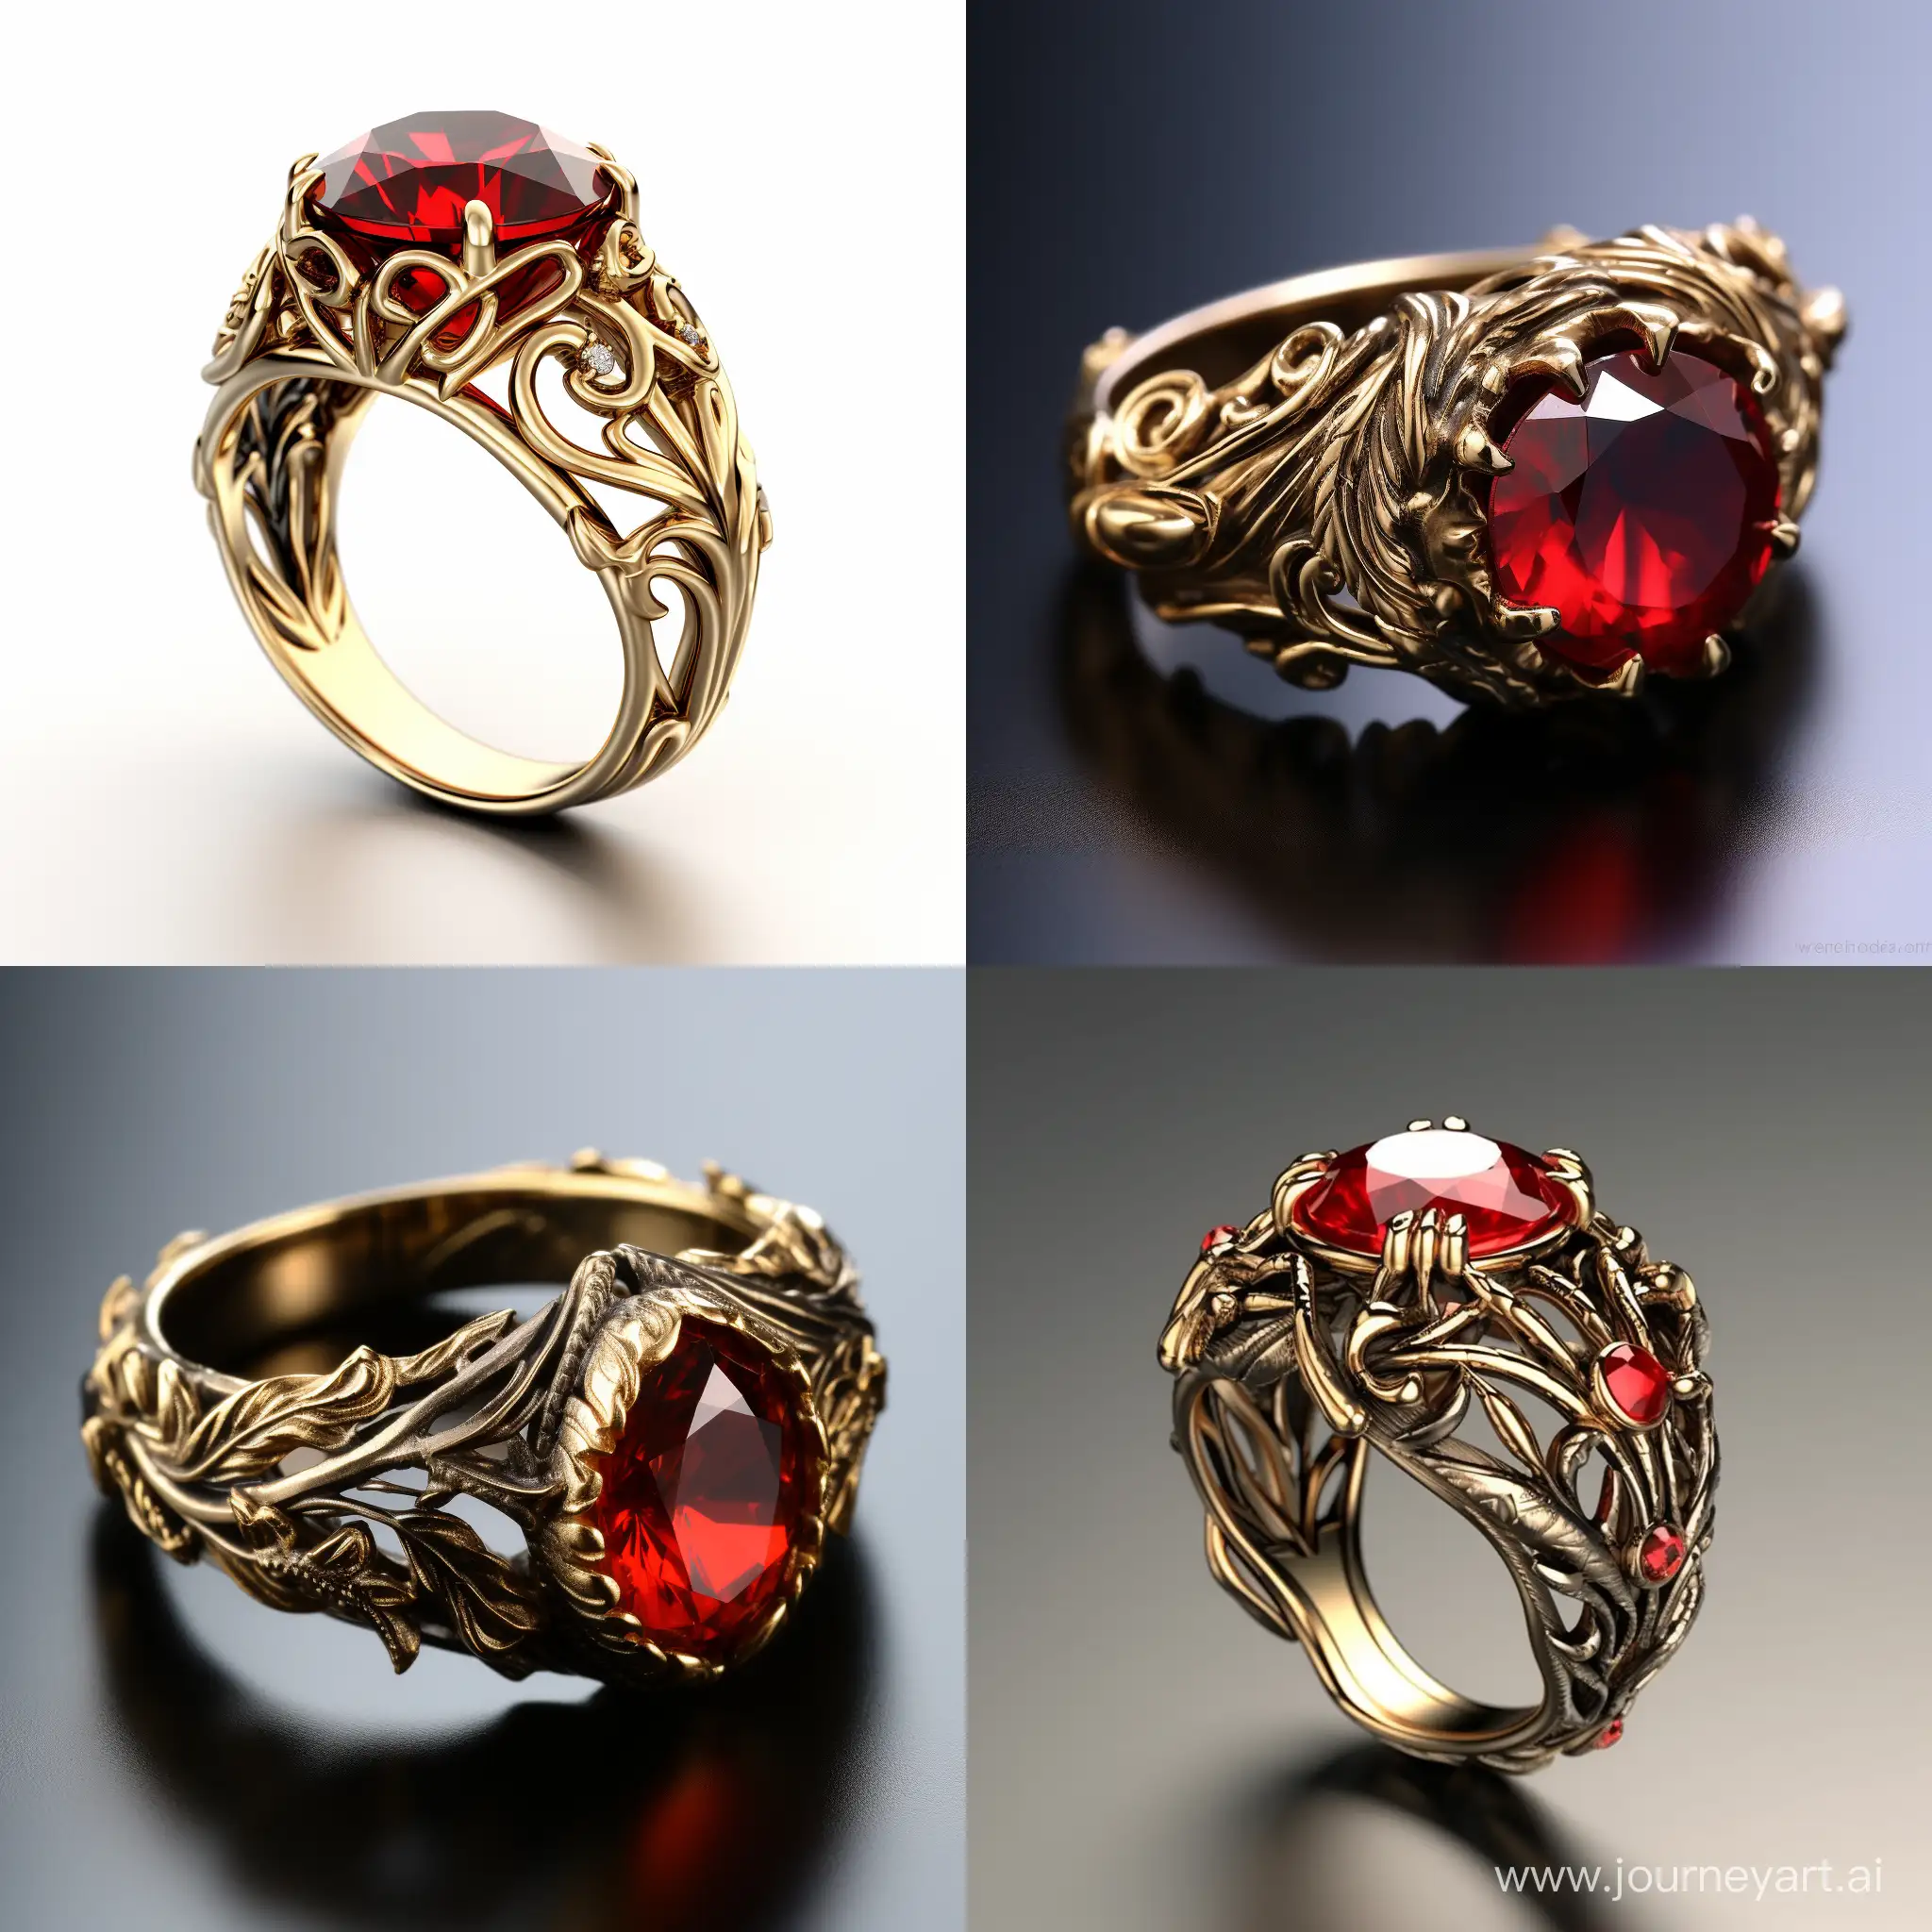 Enchanting-Fantasy-Golden-Ring-with-Vivid-Red-Stone